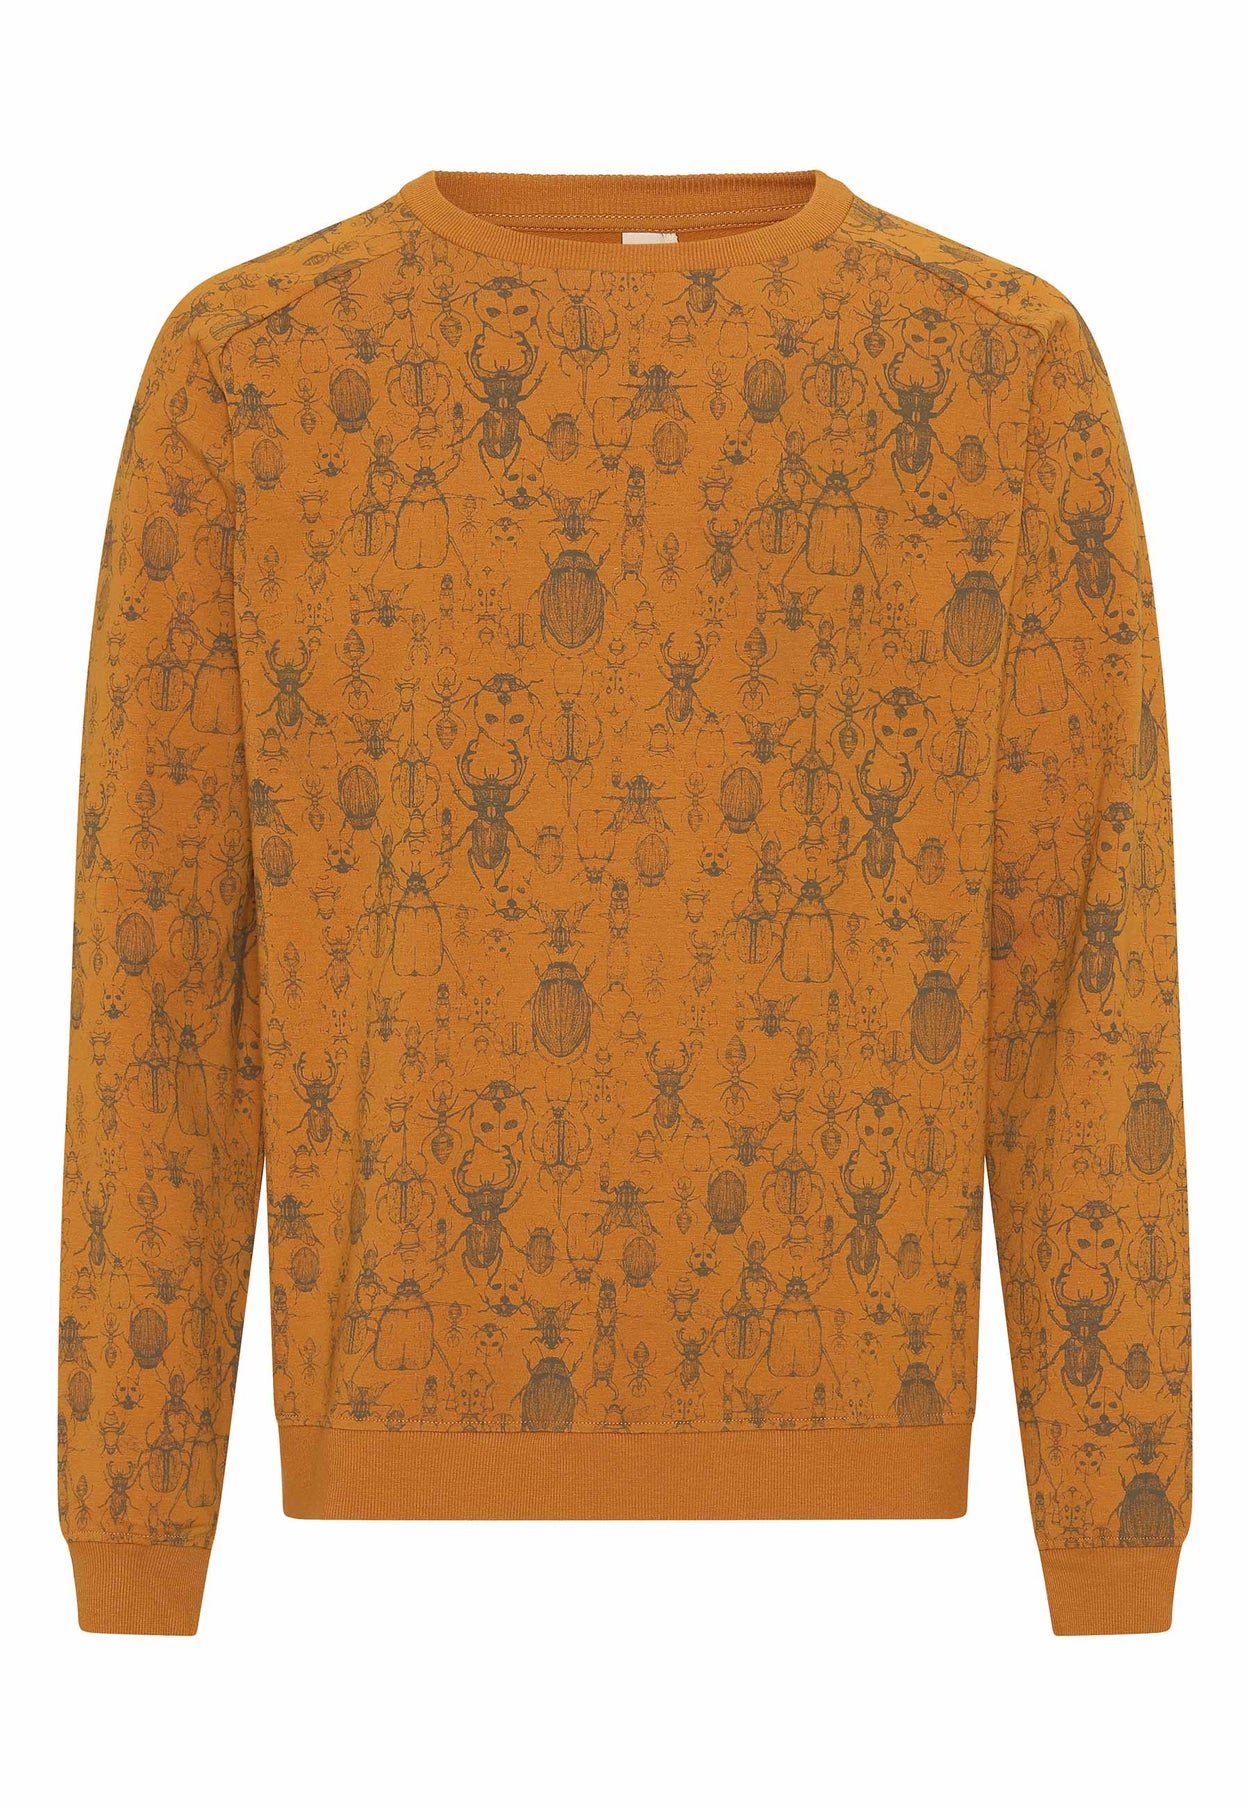 GROBUND Melvin sweatshirten - den i gylden med print